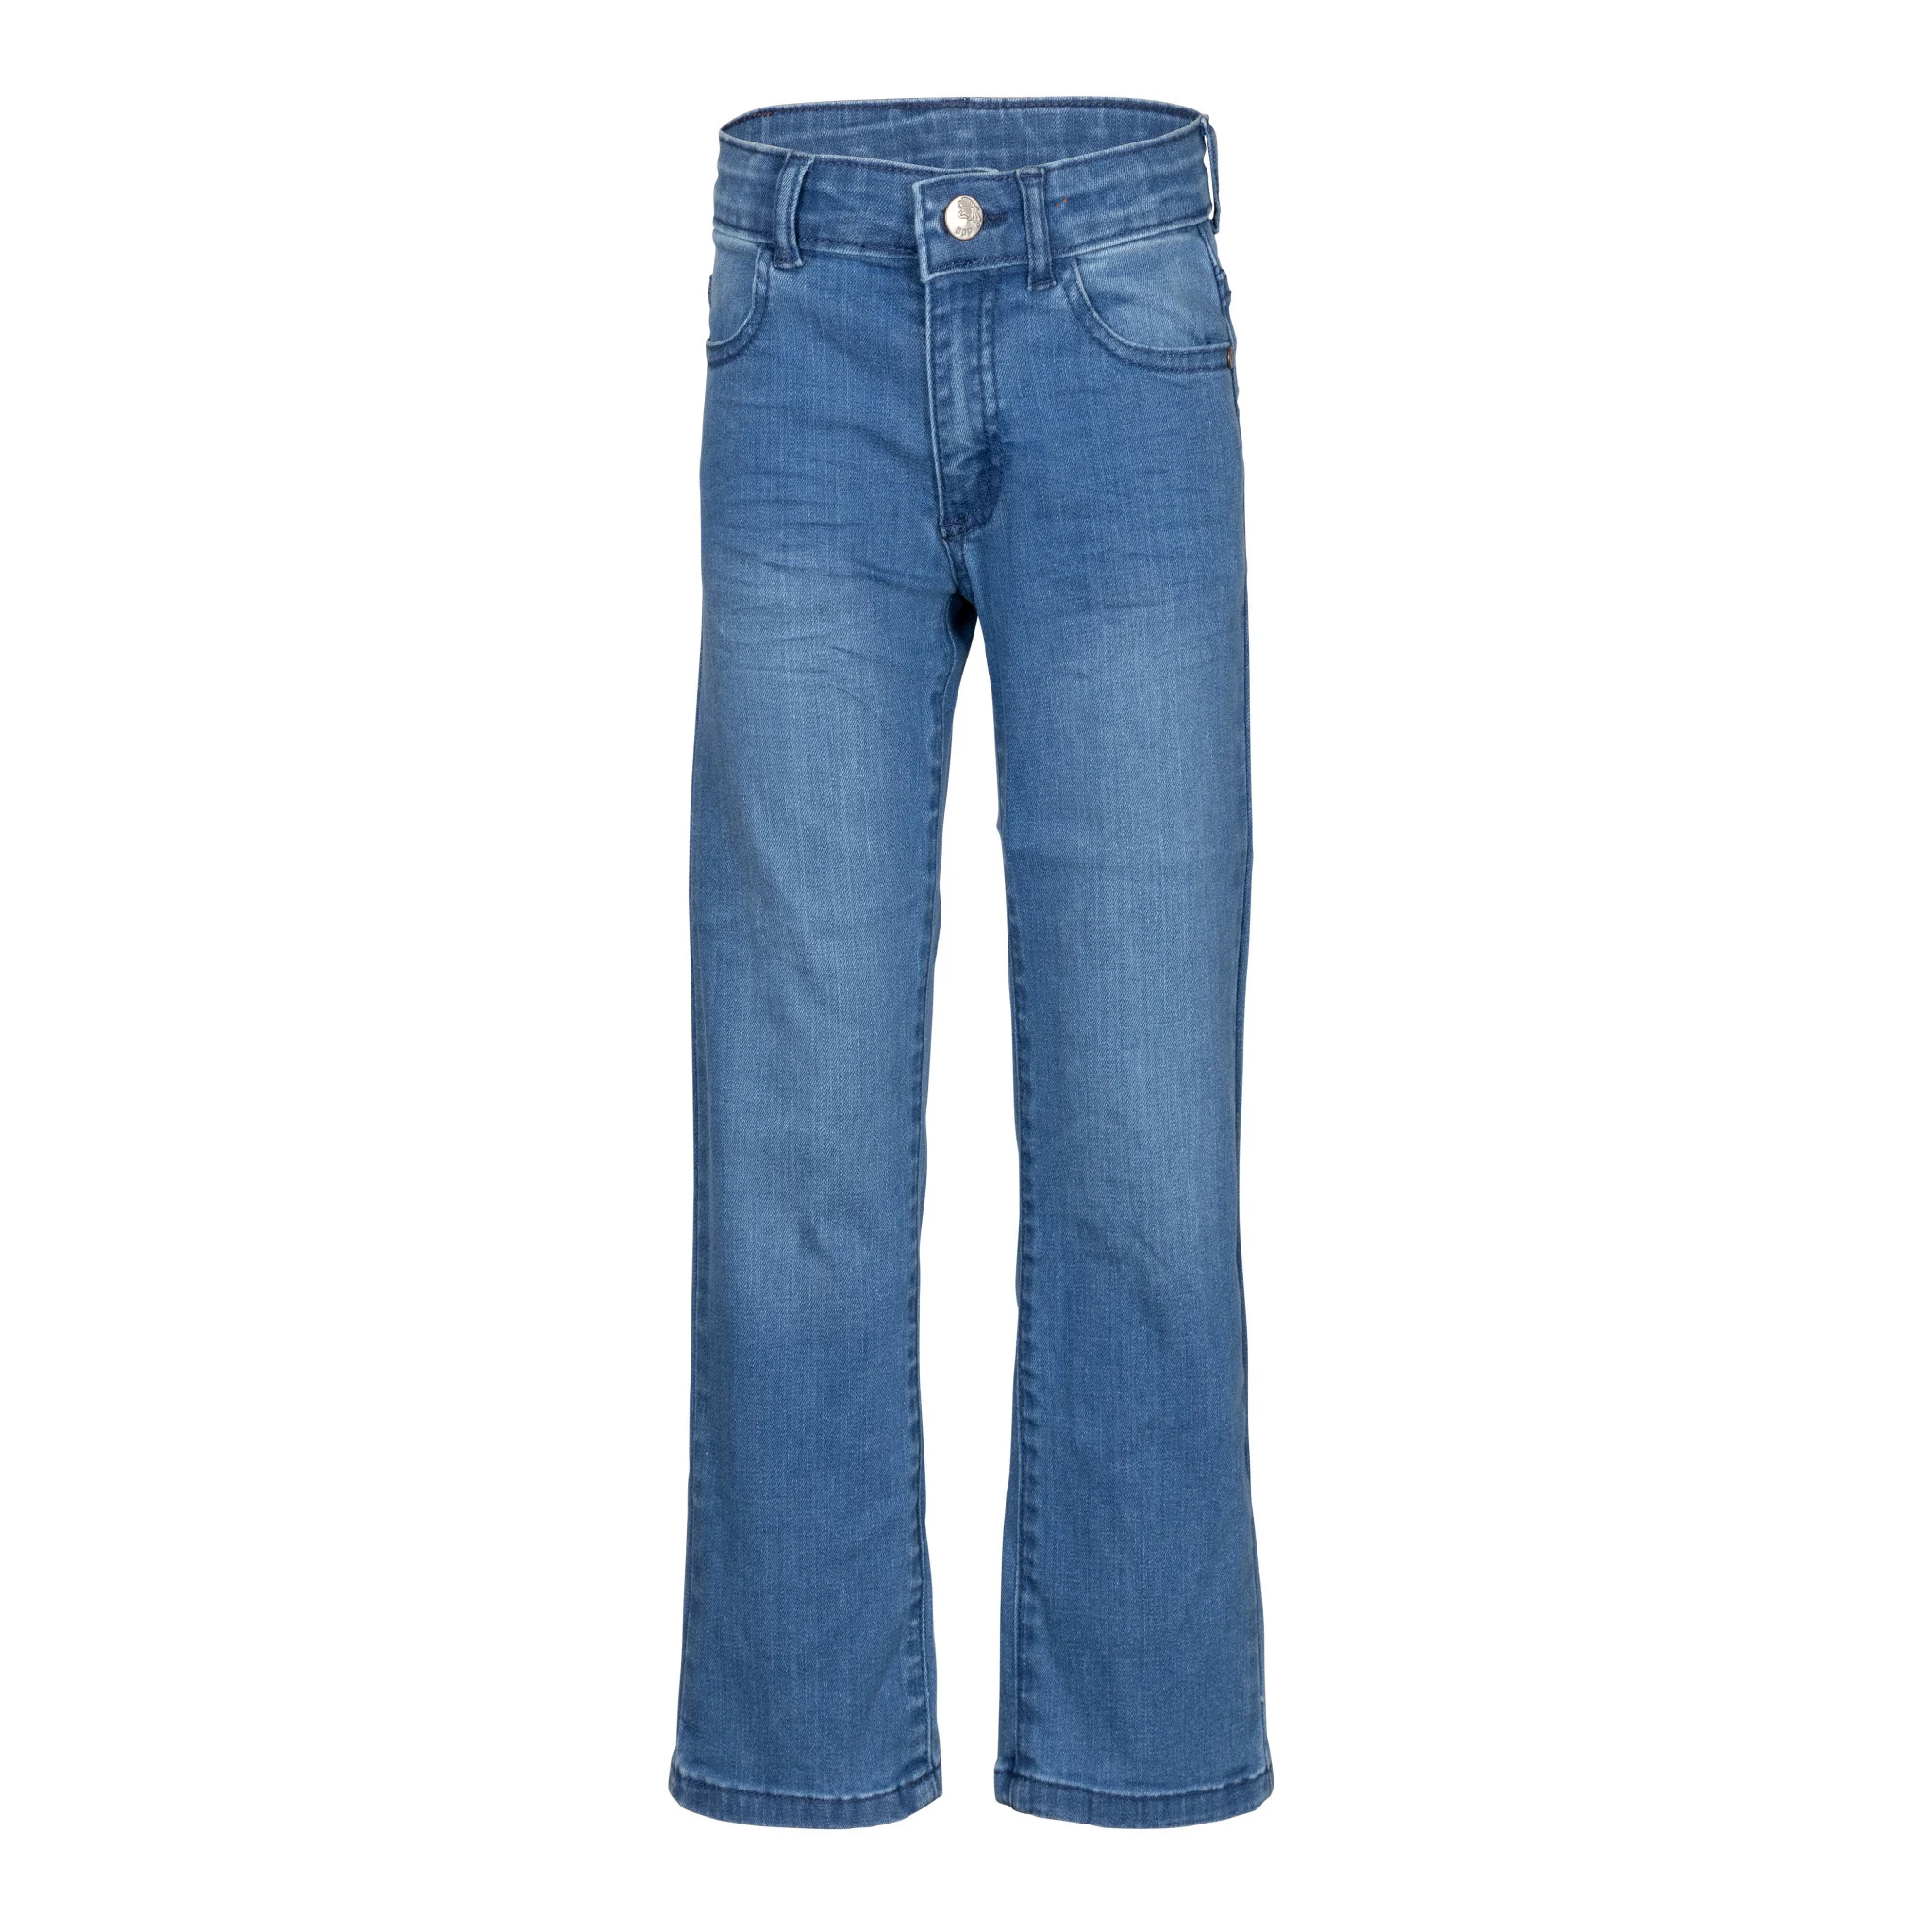 Afbeelding van Dutch Dream Denim Meiden jeans hili wid leg fit mid blue